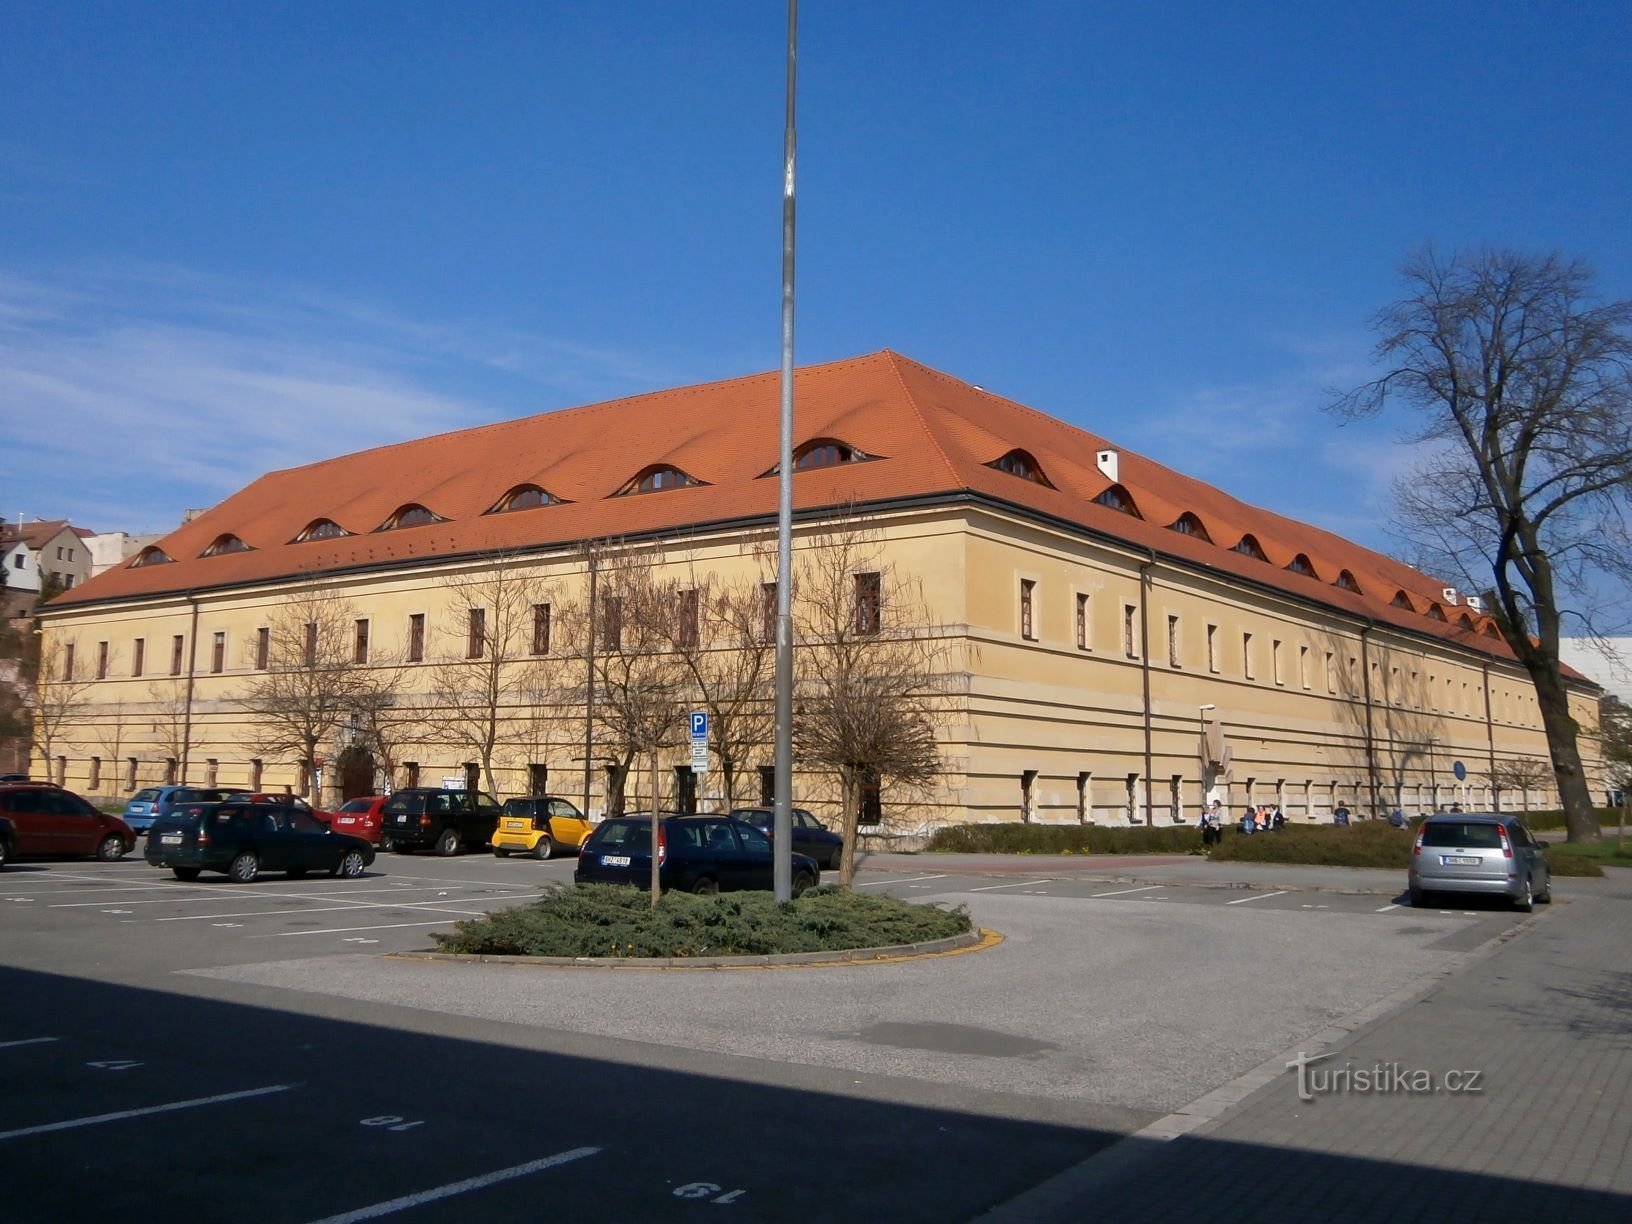 Cuartel de caballería (Hradec Králové, 13.4.2016 de abril de XNUMX)